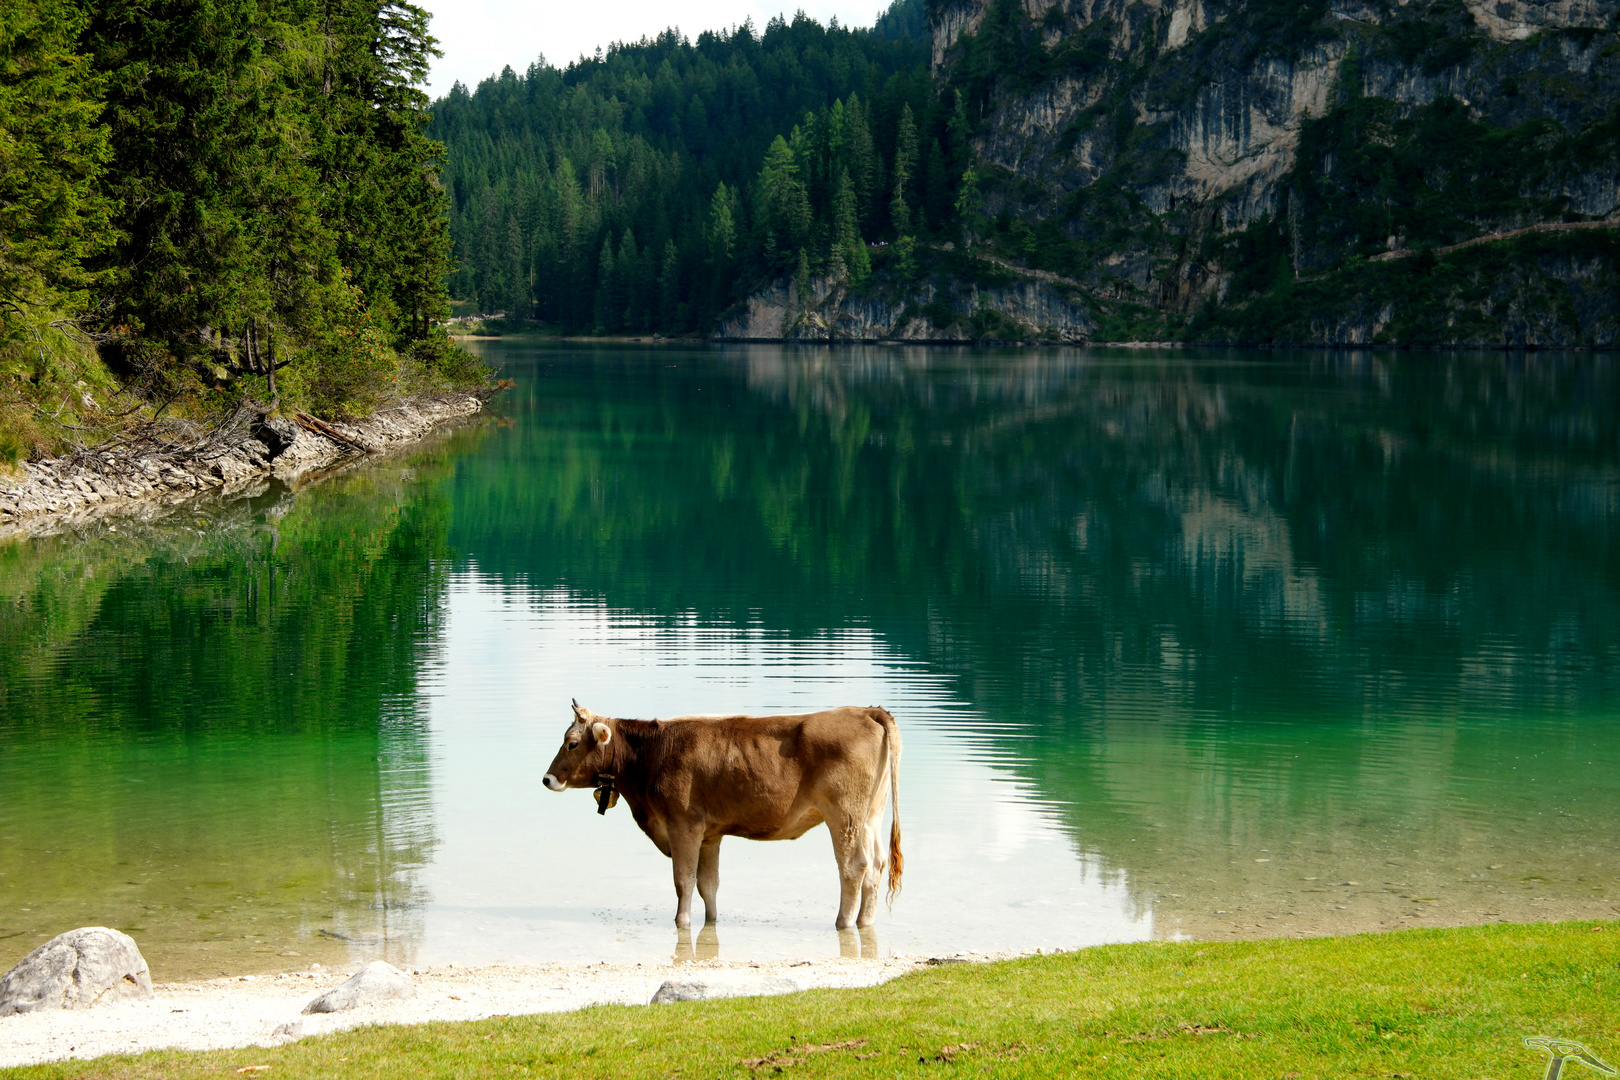 Kuh im Pragser Wildsee